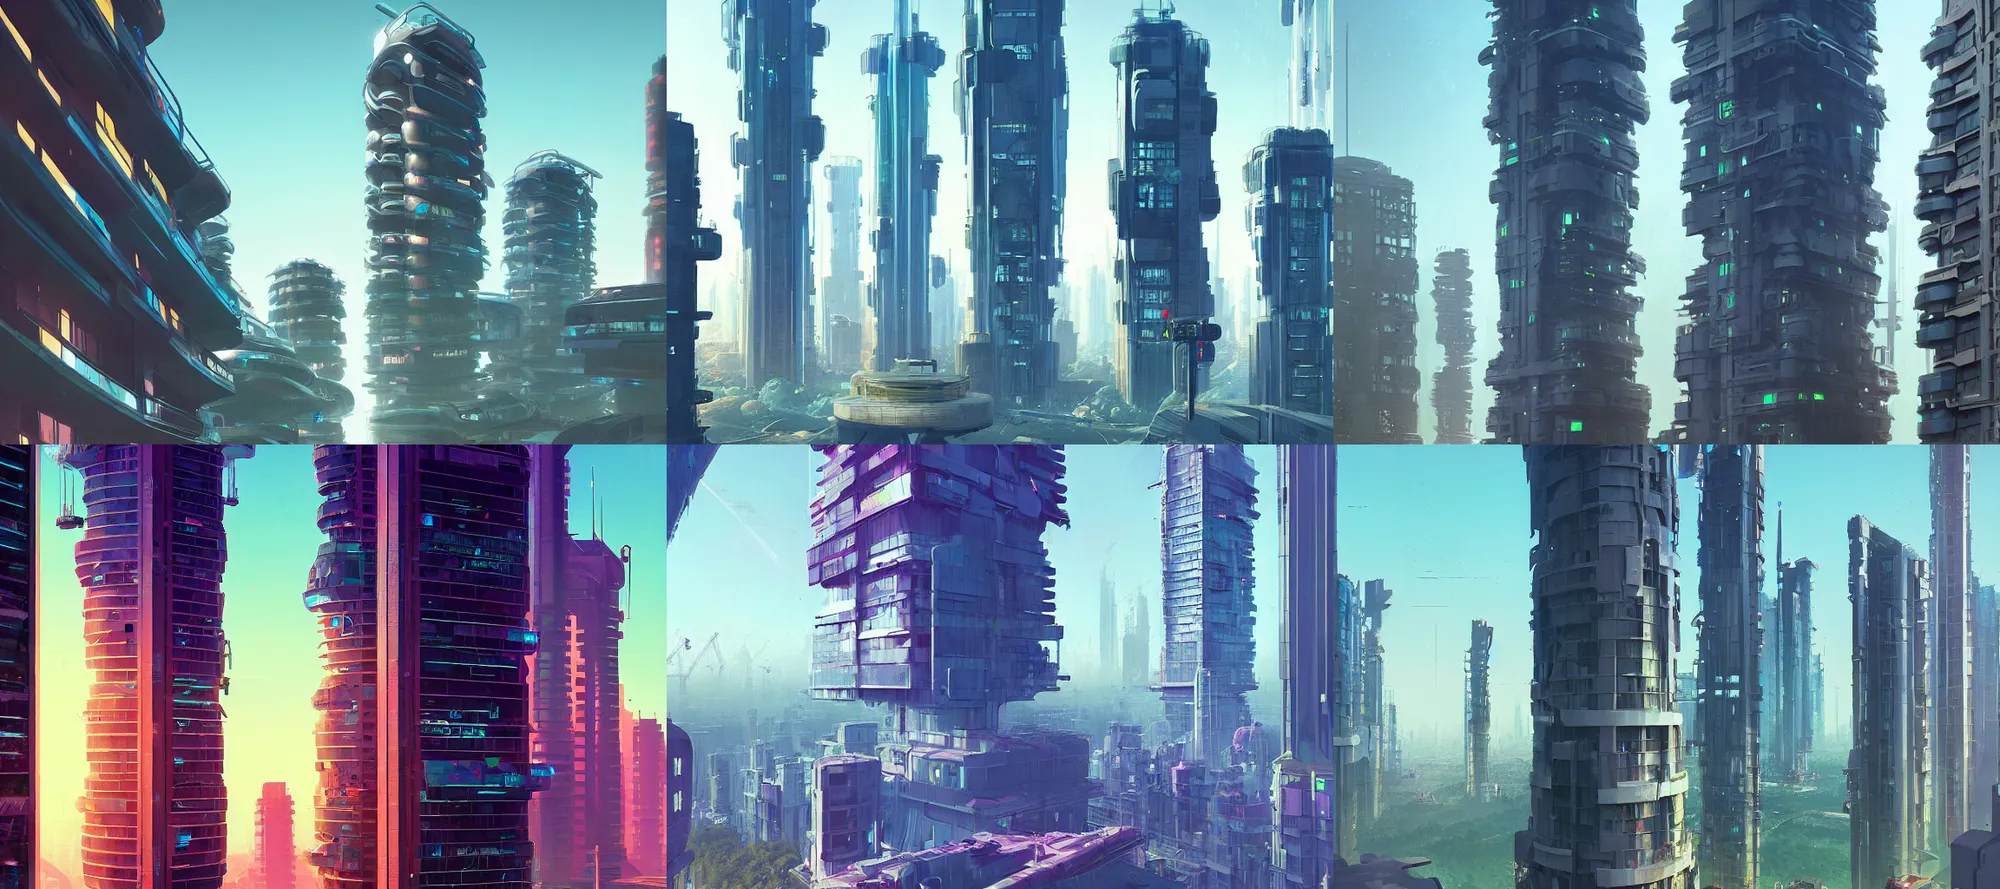 Prompt: a futuristic high-rise cityscape rendered by beeple makoto shinkai syd mead simon stalenhag environment concept digital art unreal